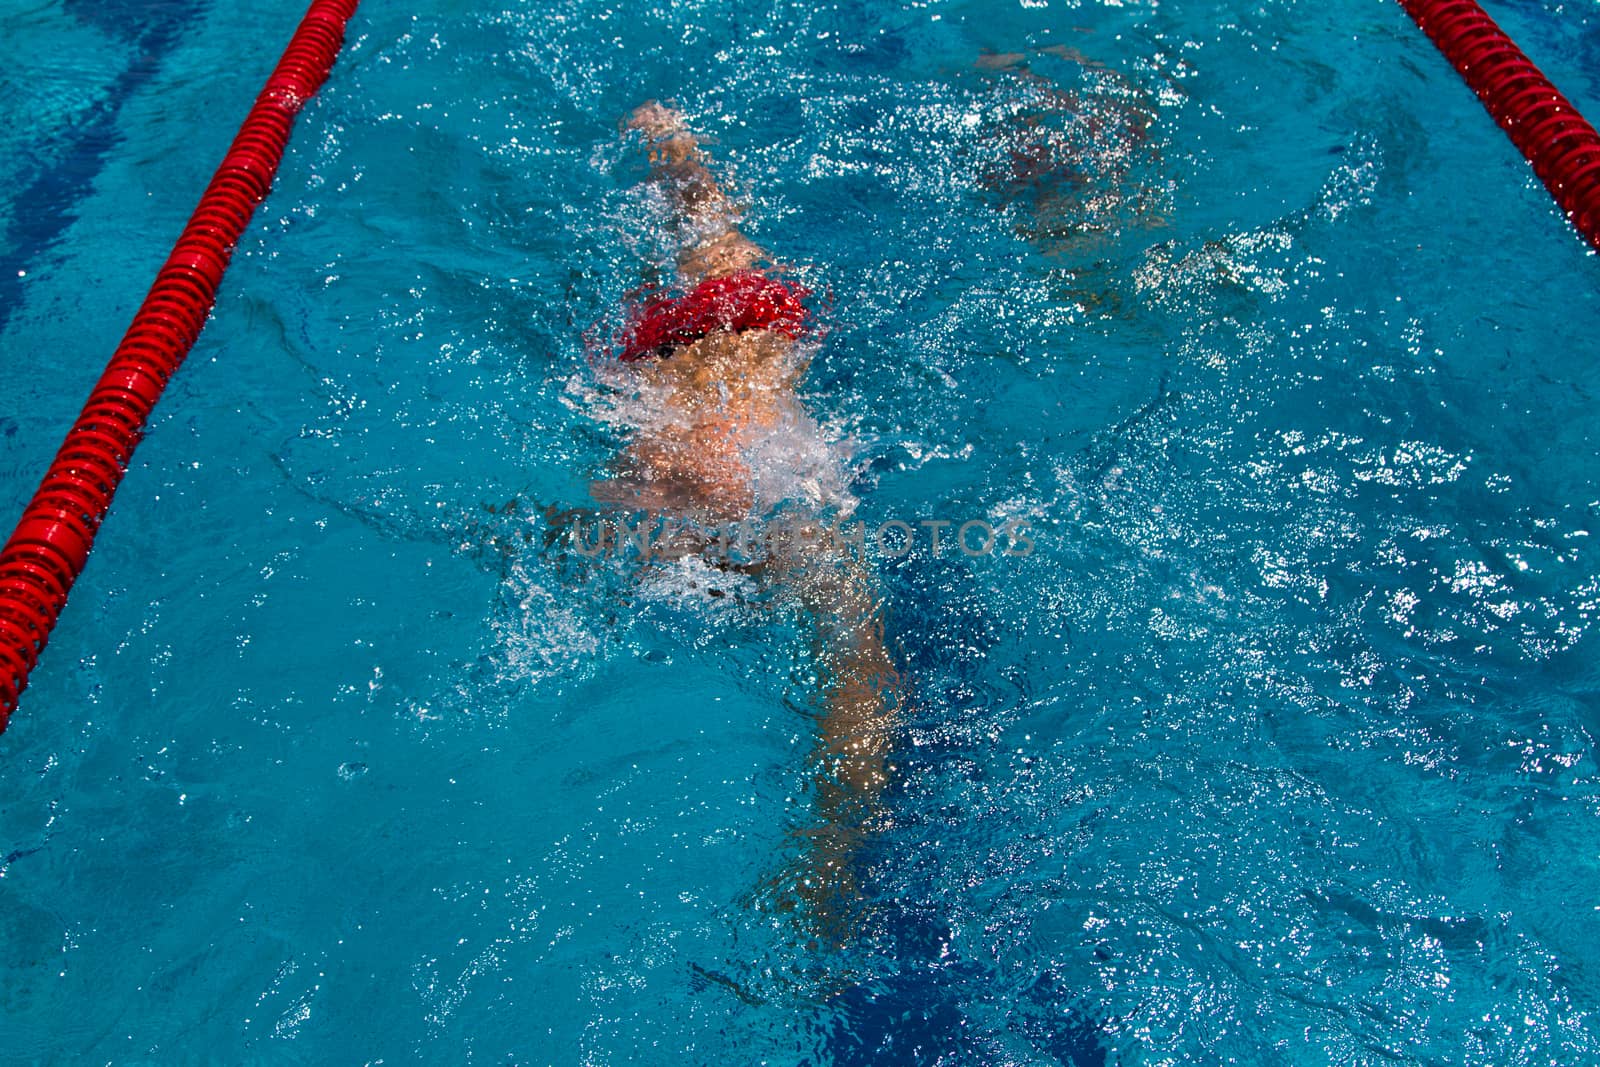 Swimming - Stock Image by grigorenko